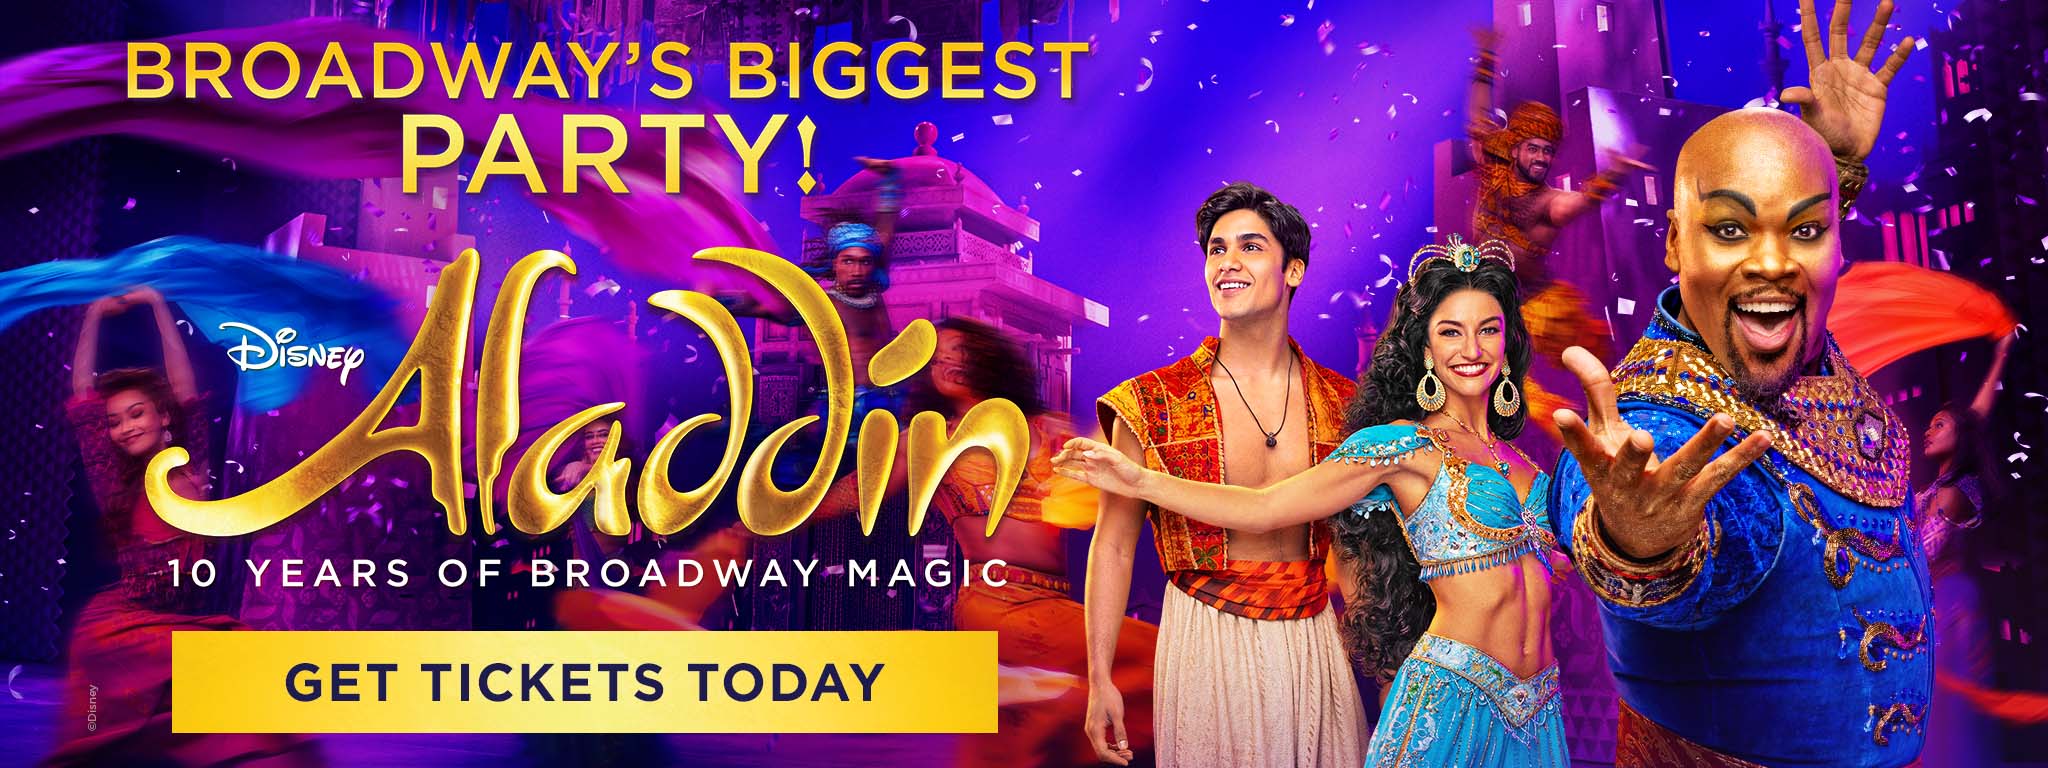 Aladdin: The Musical: Where is Abu?! *Throws Wardrobe